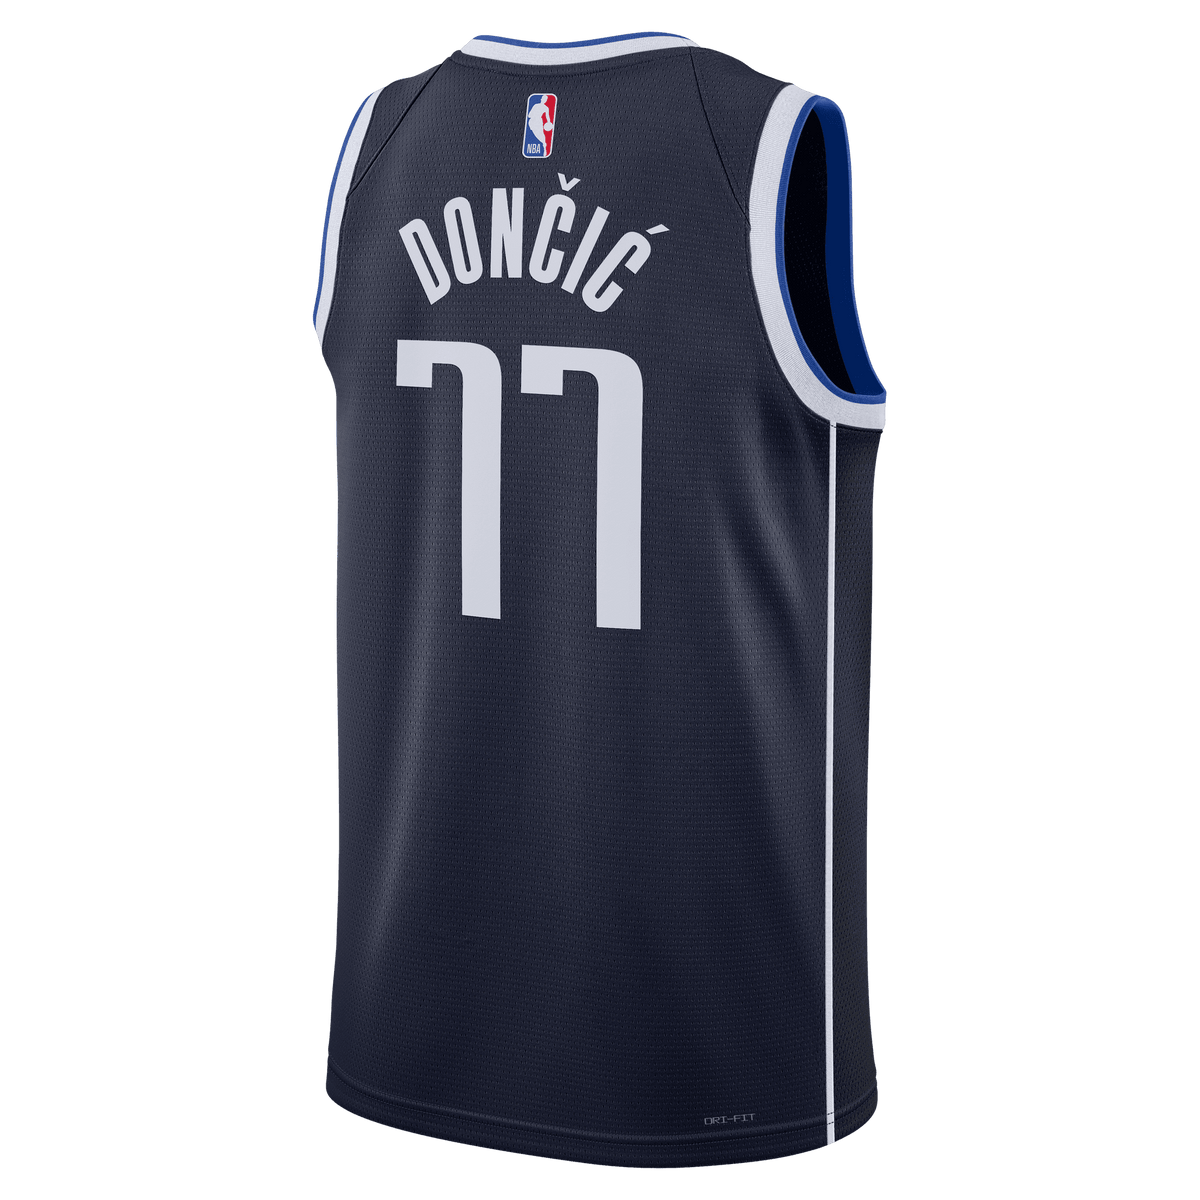 Dallas Mavs Shop on X: Dončić Statement Jerseys in stock now